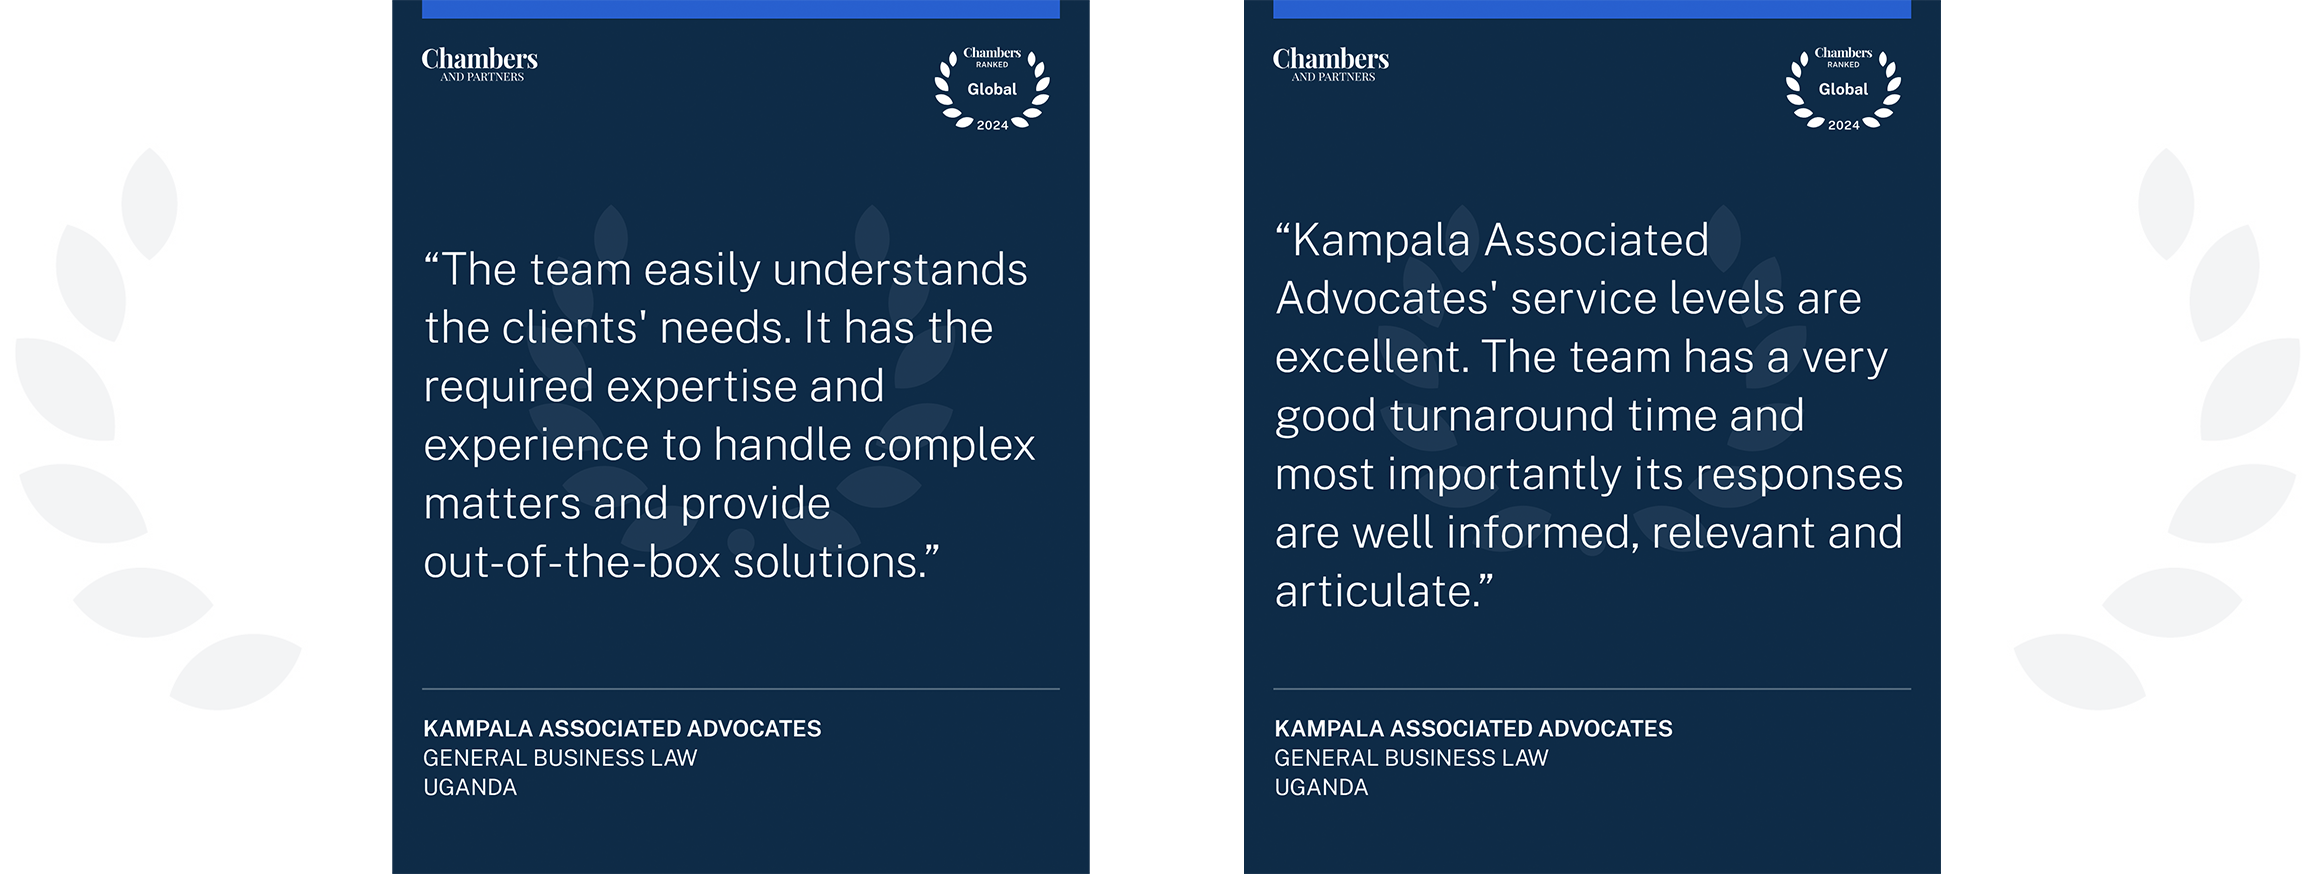 Rankings and Accolades - Kampala Associated Advocates